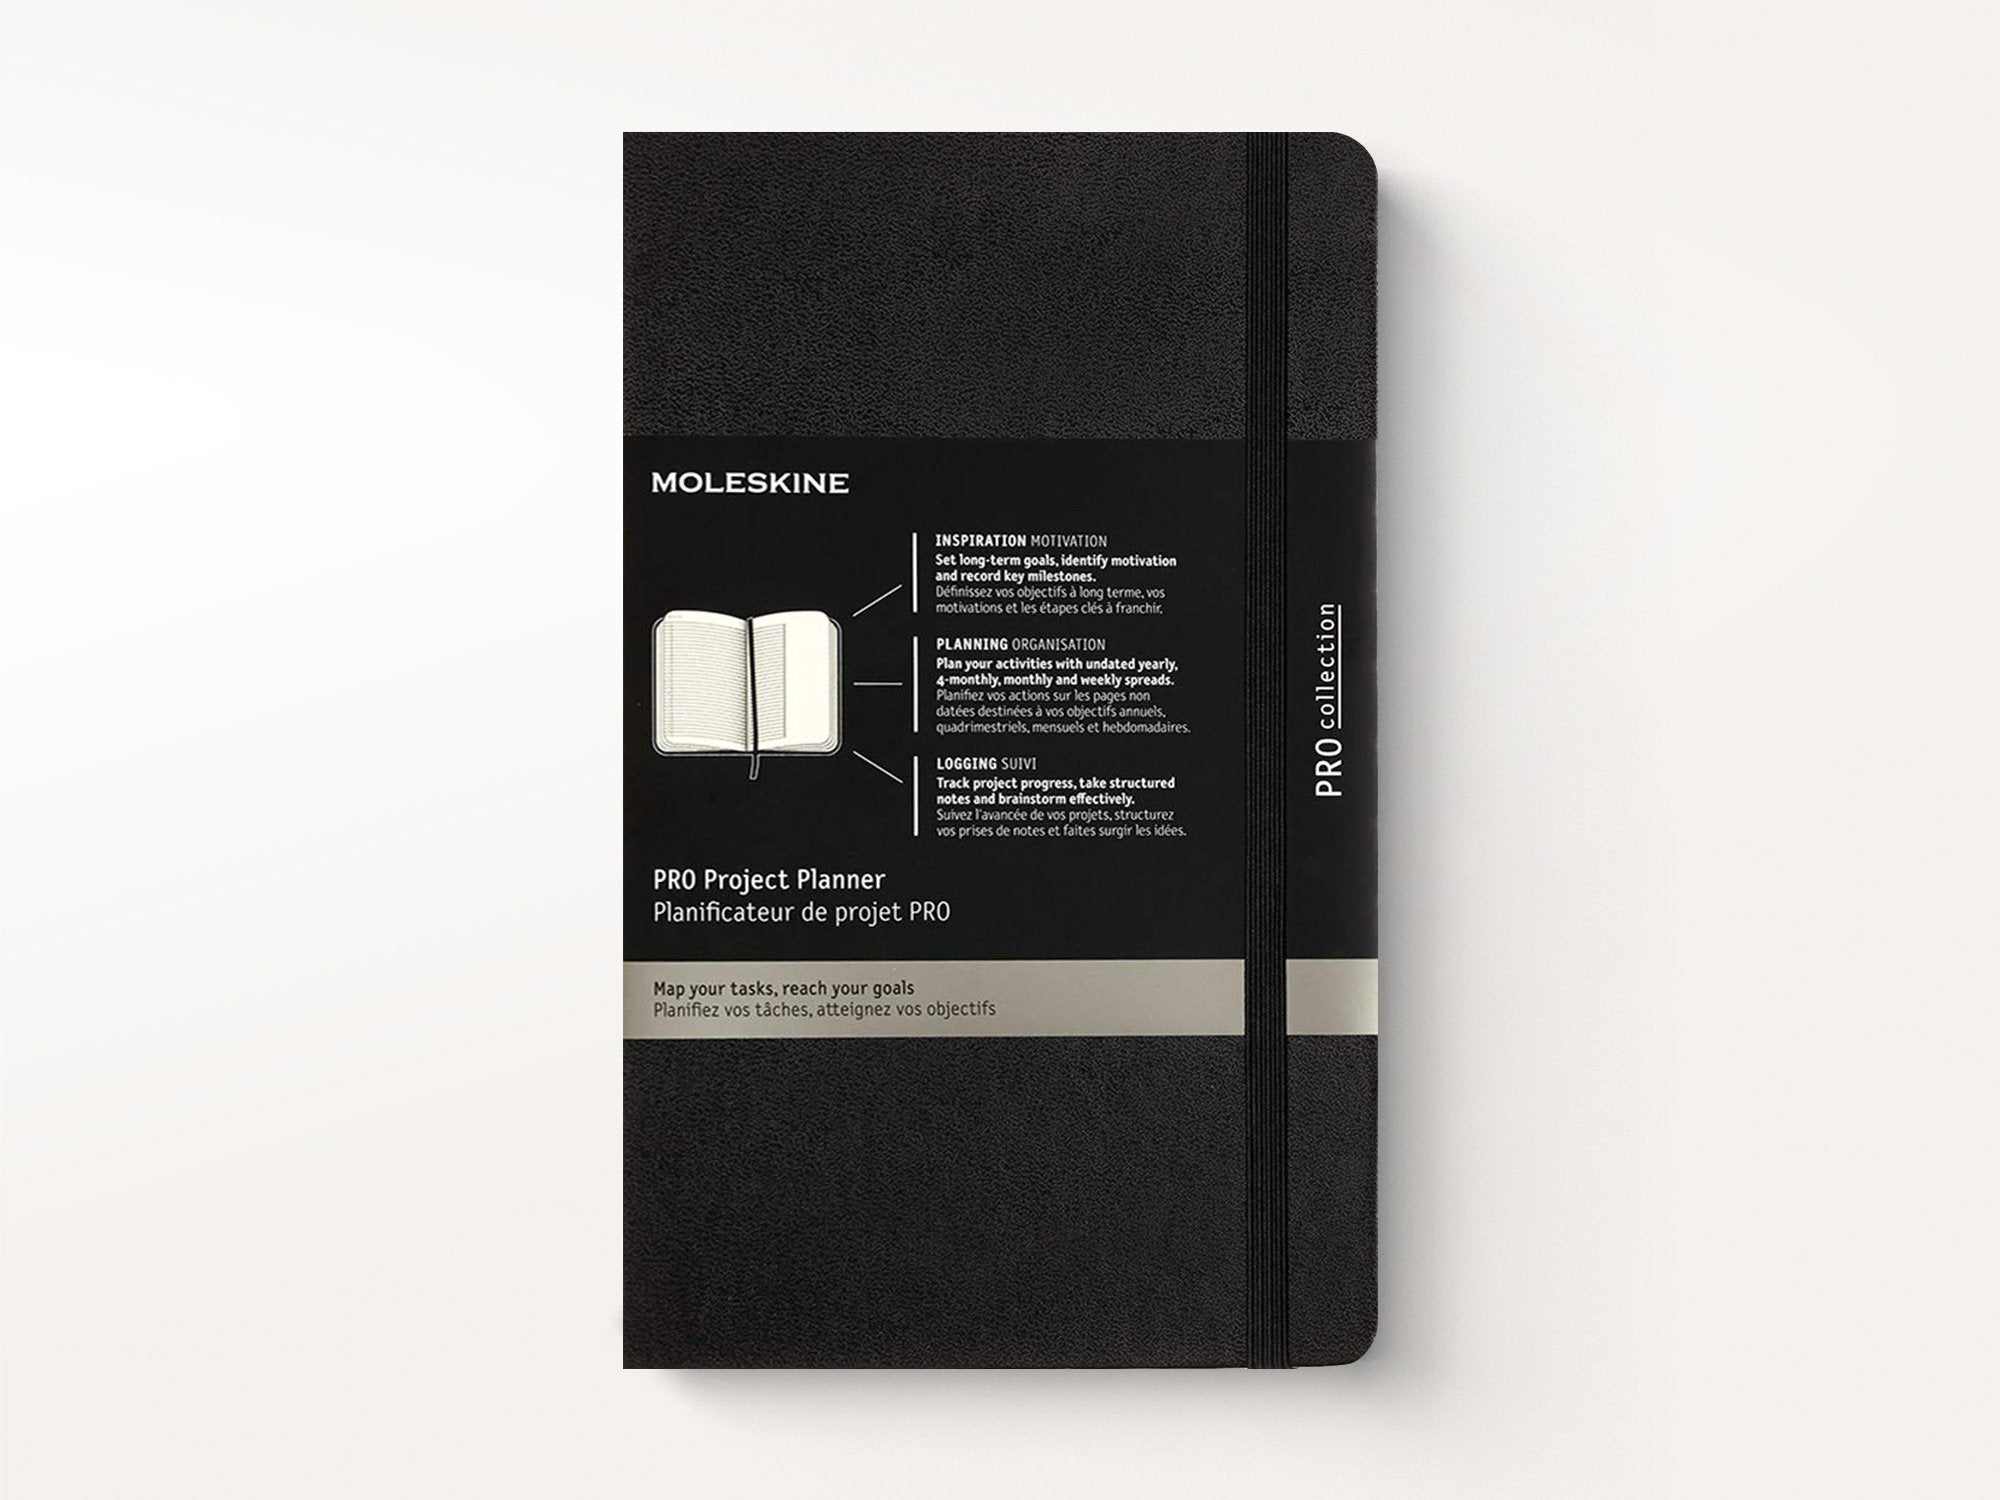 Printable Book Review Traveler's Notebook Insert